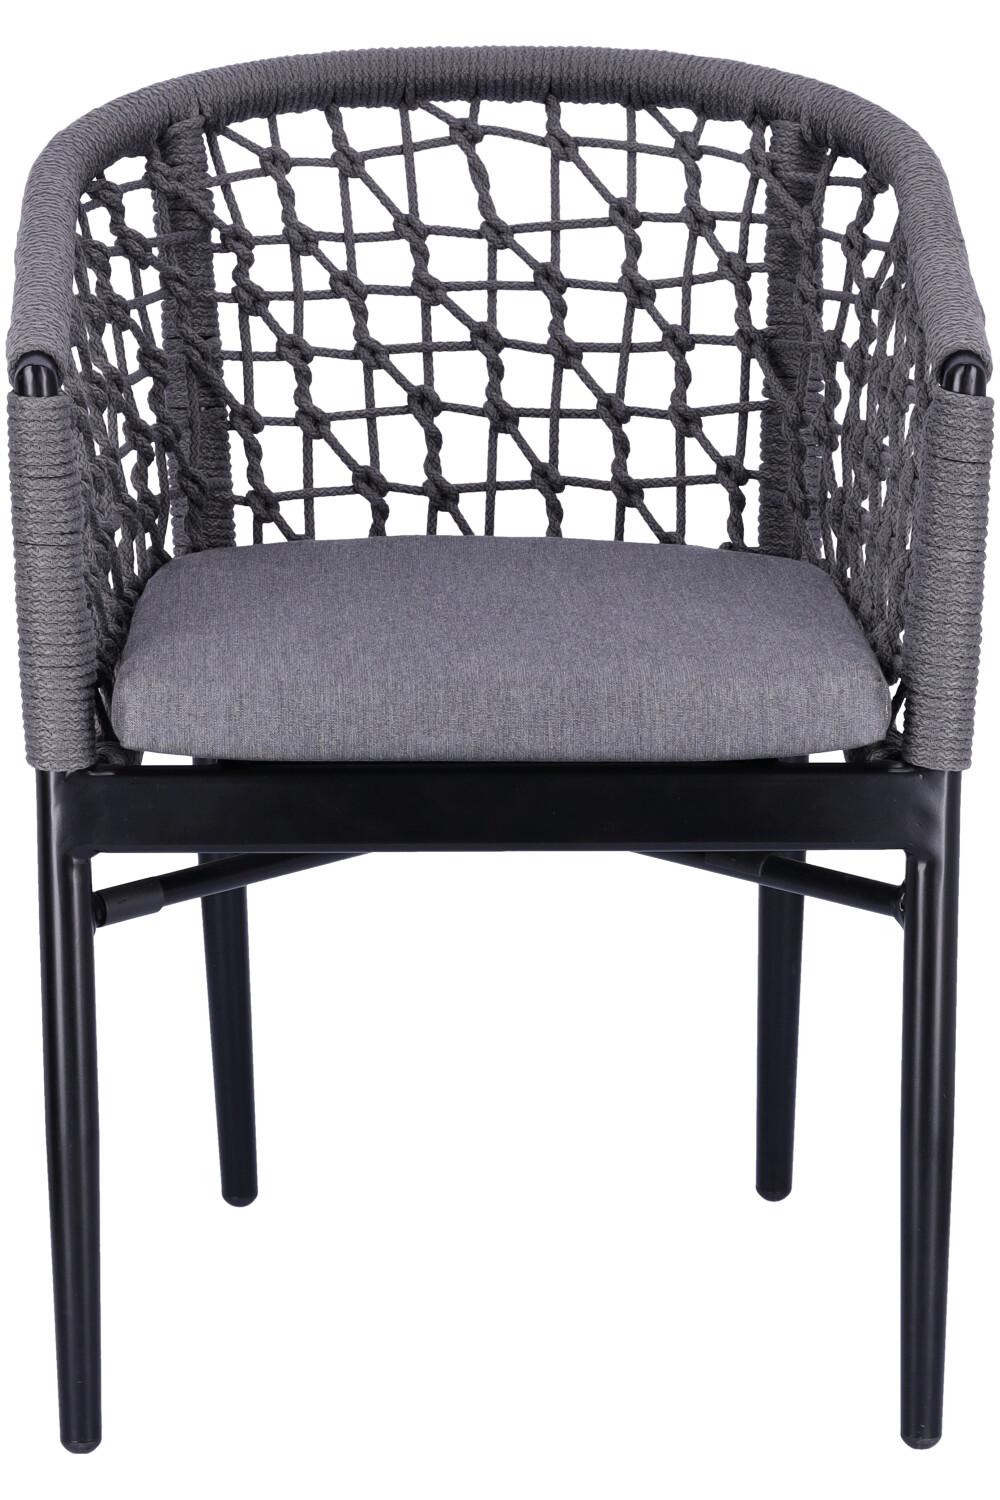 Abbildung arm chair Penka Vorderansicht